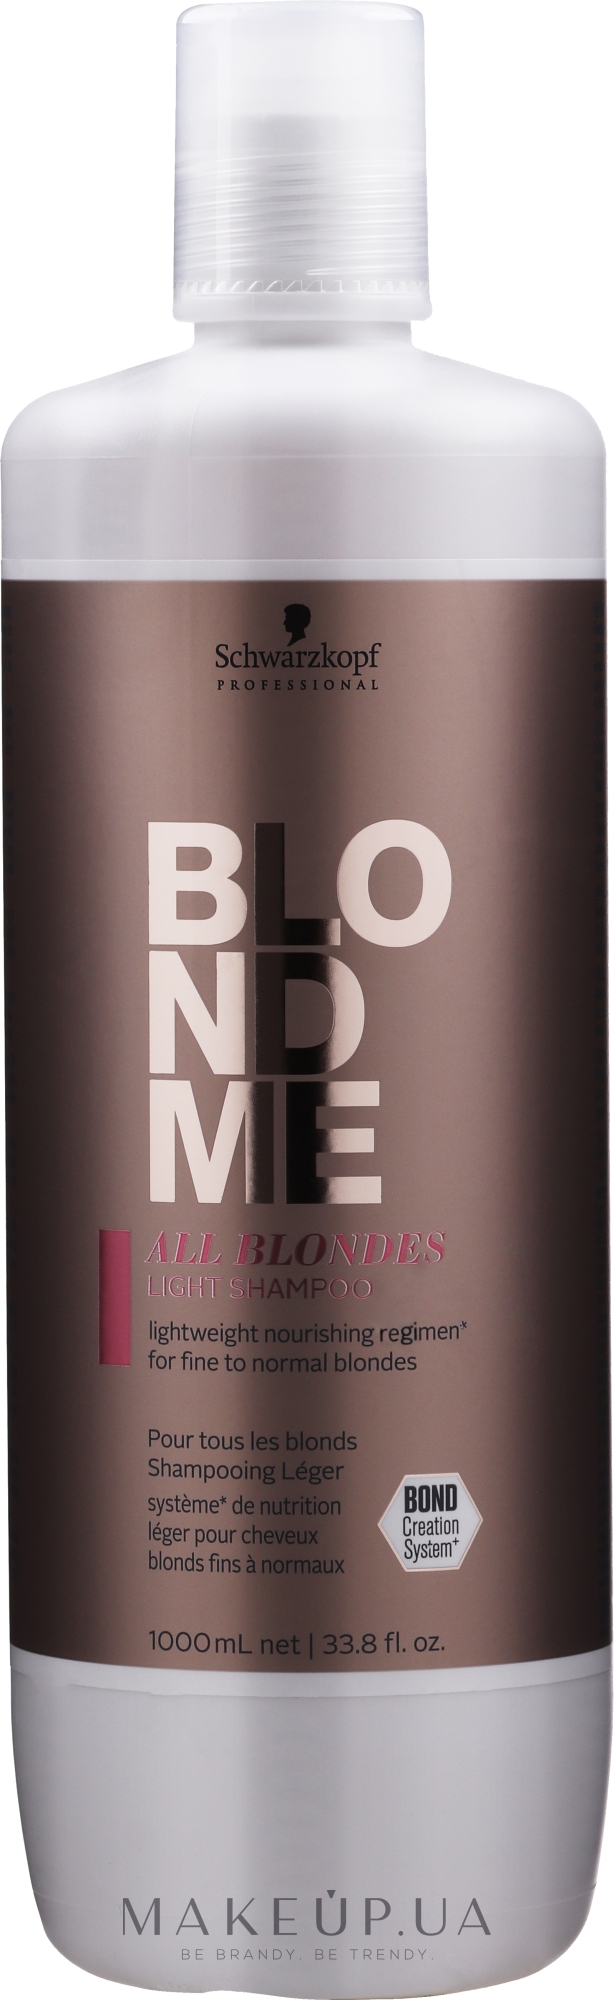 Шампунь для тонких волос всех типов блонд - Schwarzkopf Professional Blondme All Blondes Light Shampoo — фото 1000ml